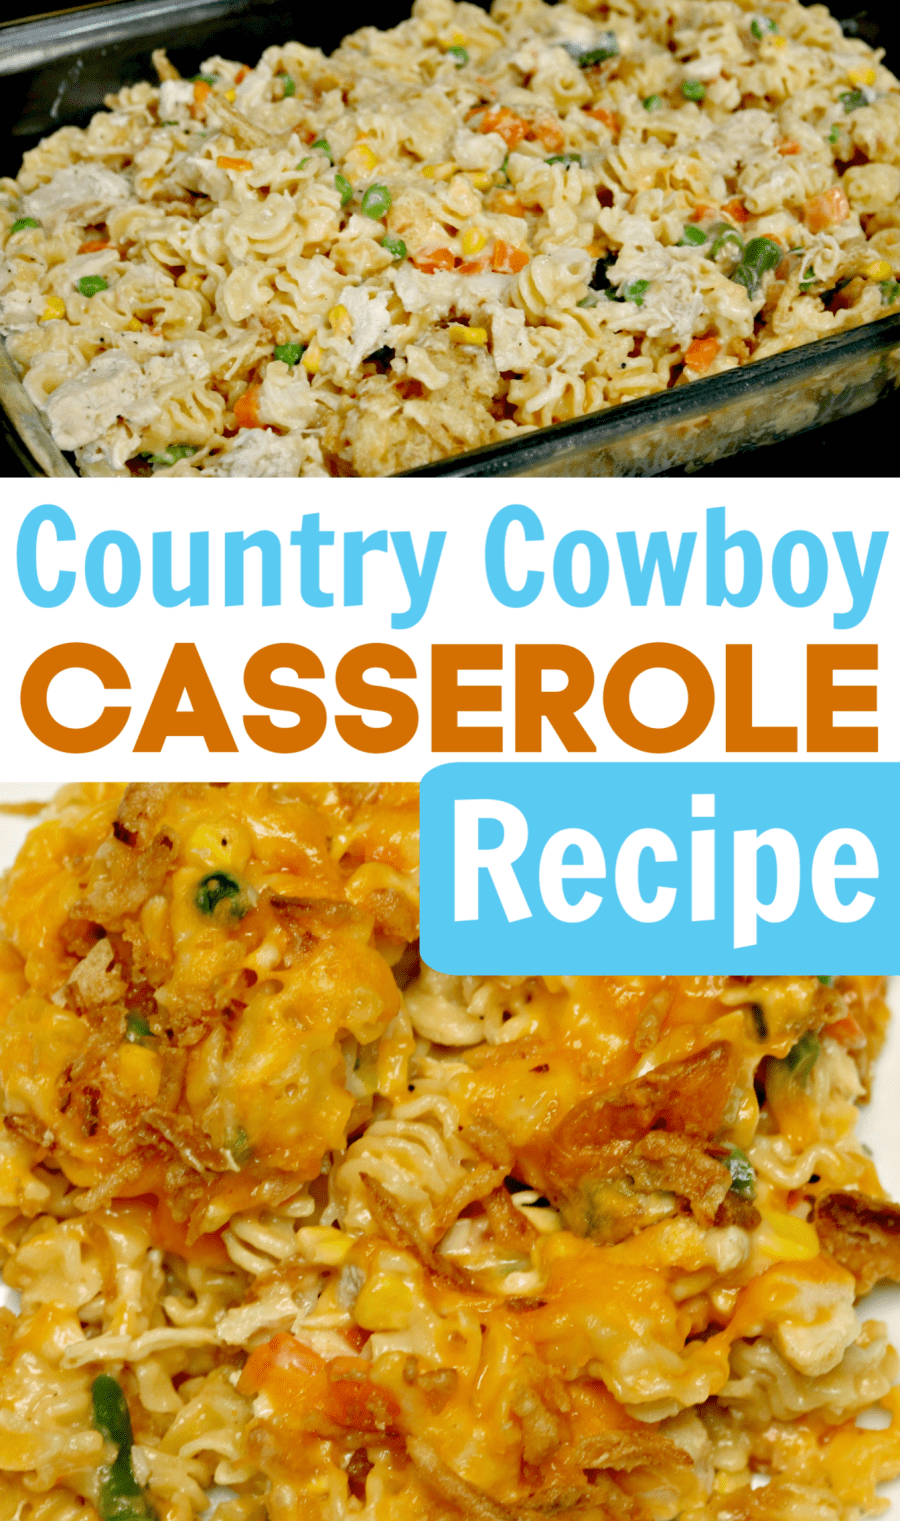 Country Cowboy Casserole Recipe